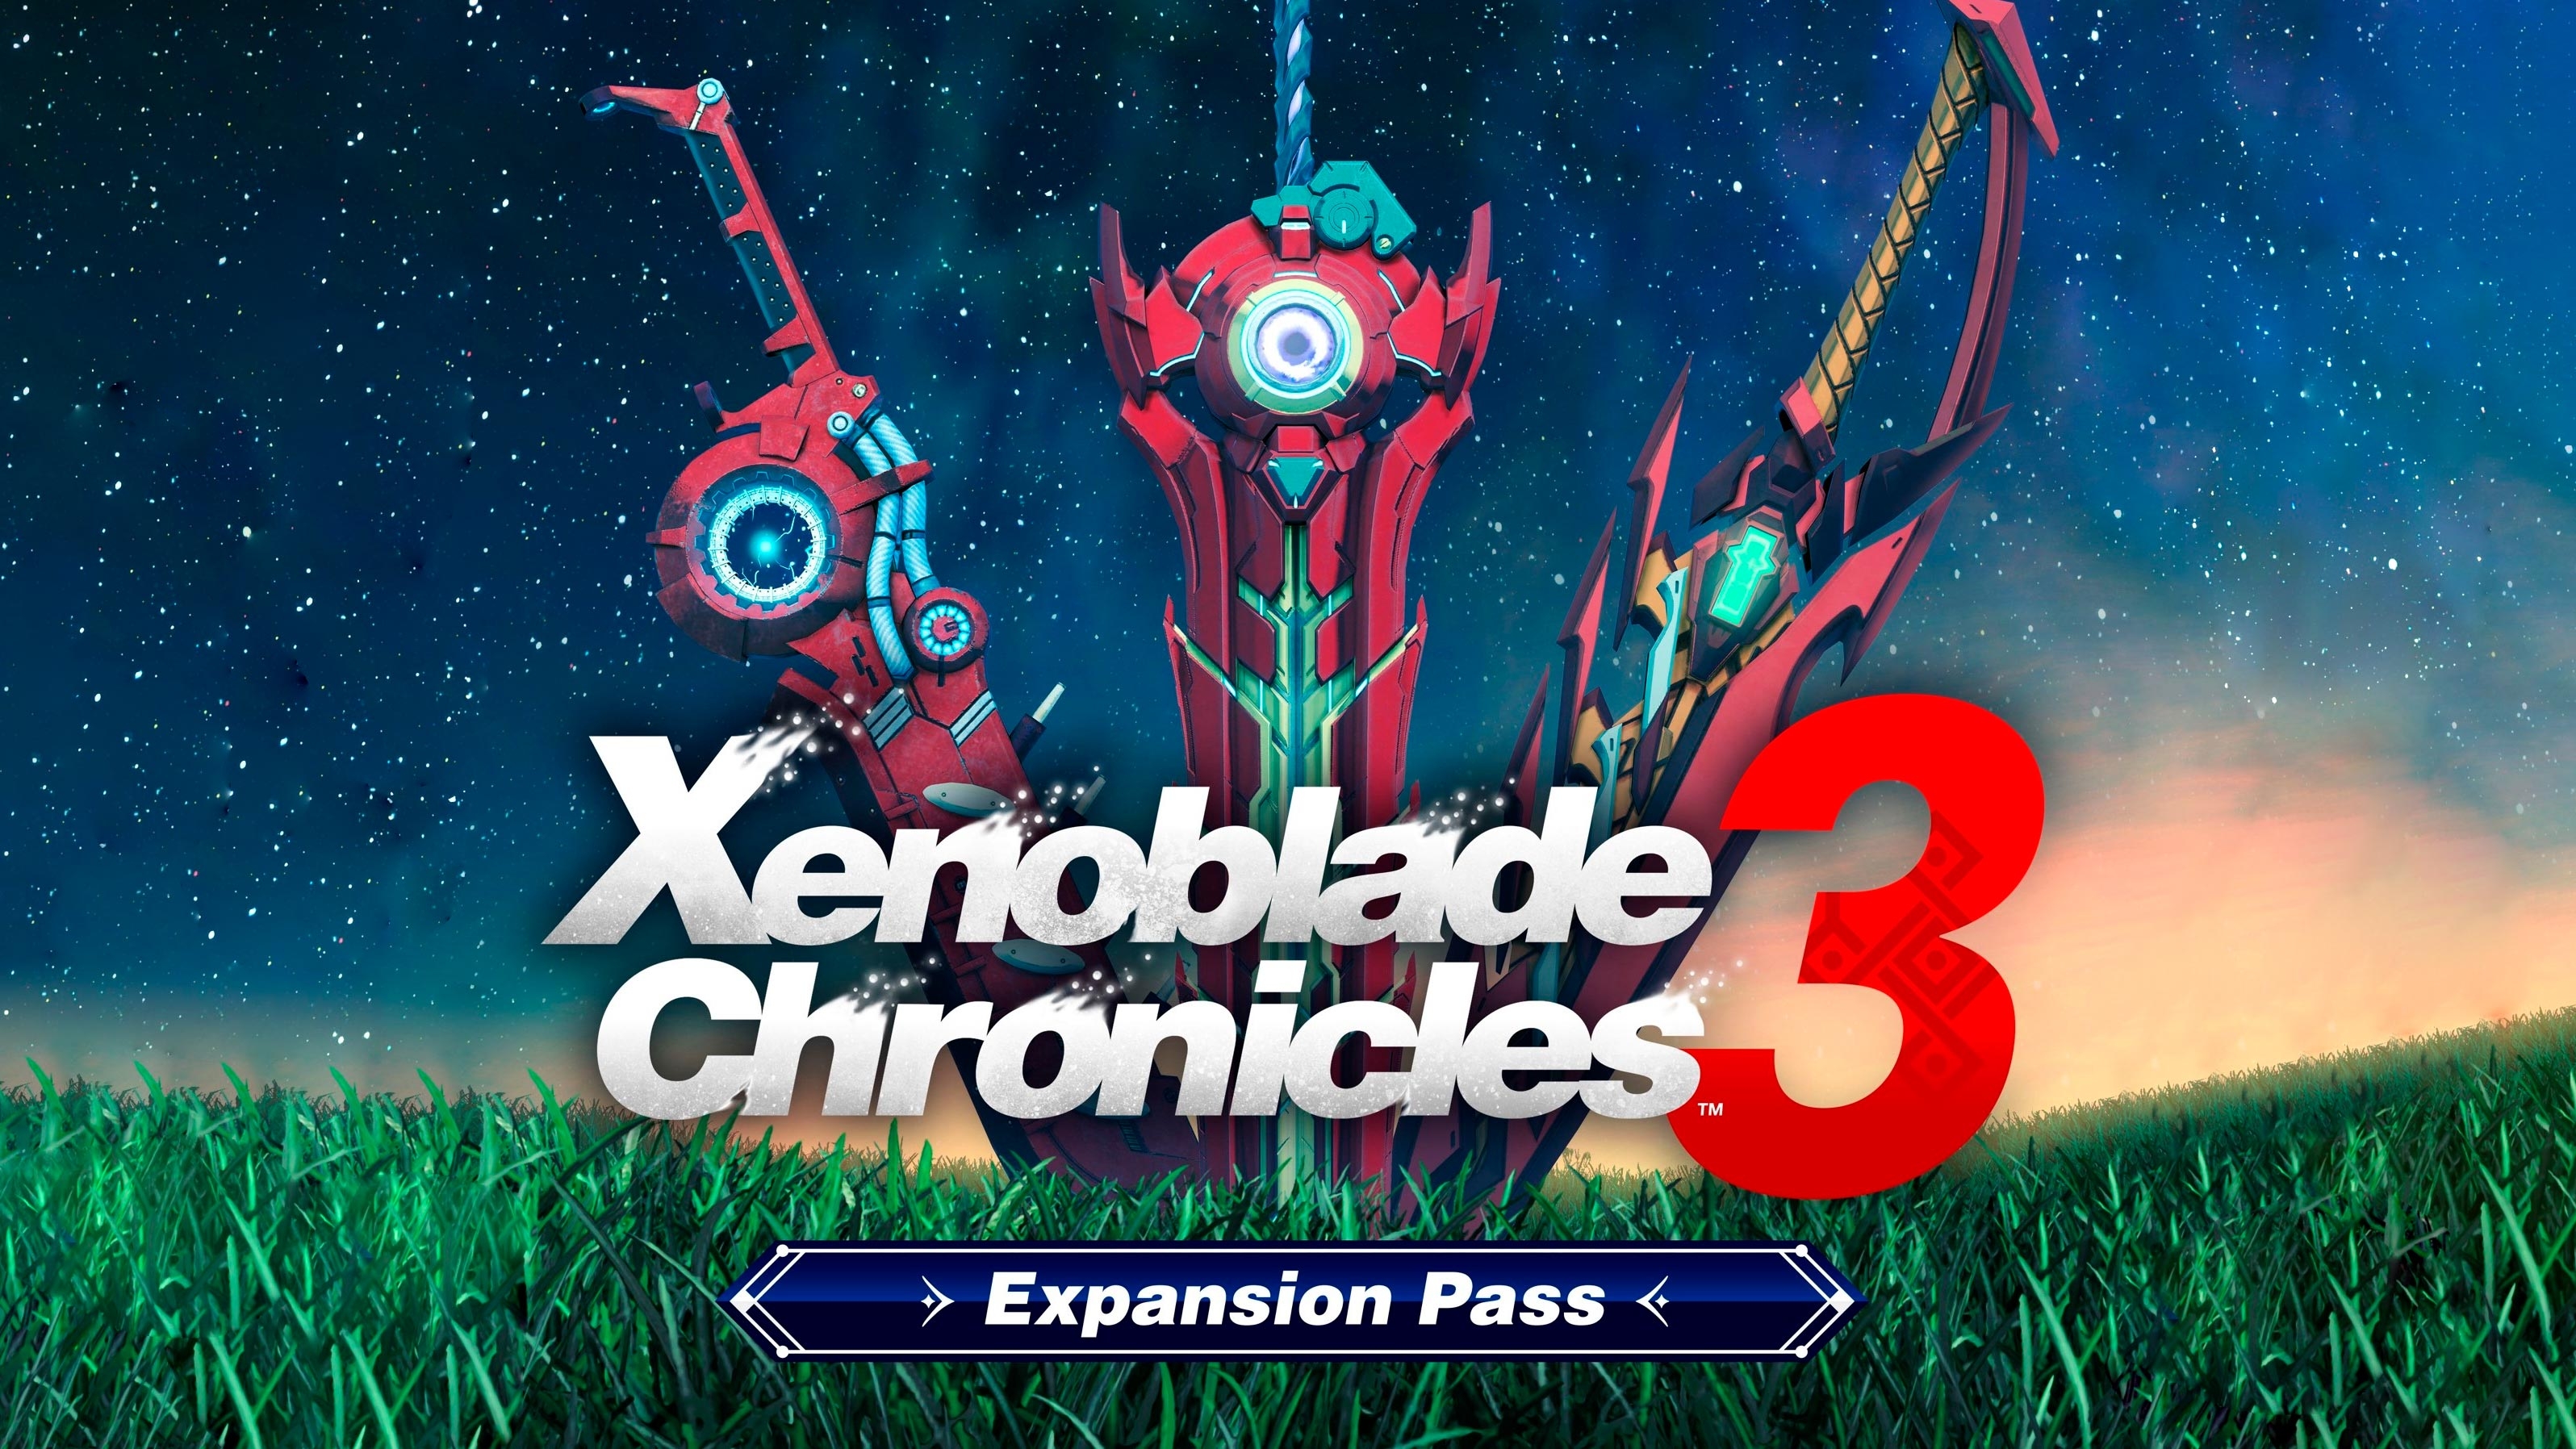 Pass Expansion Xenoblade Switch 3 Chronicles Buy Eshop Nintendo